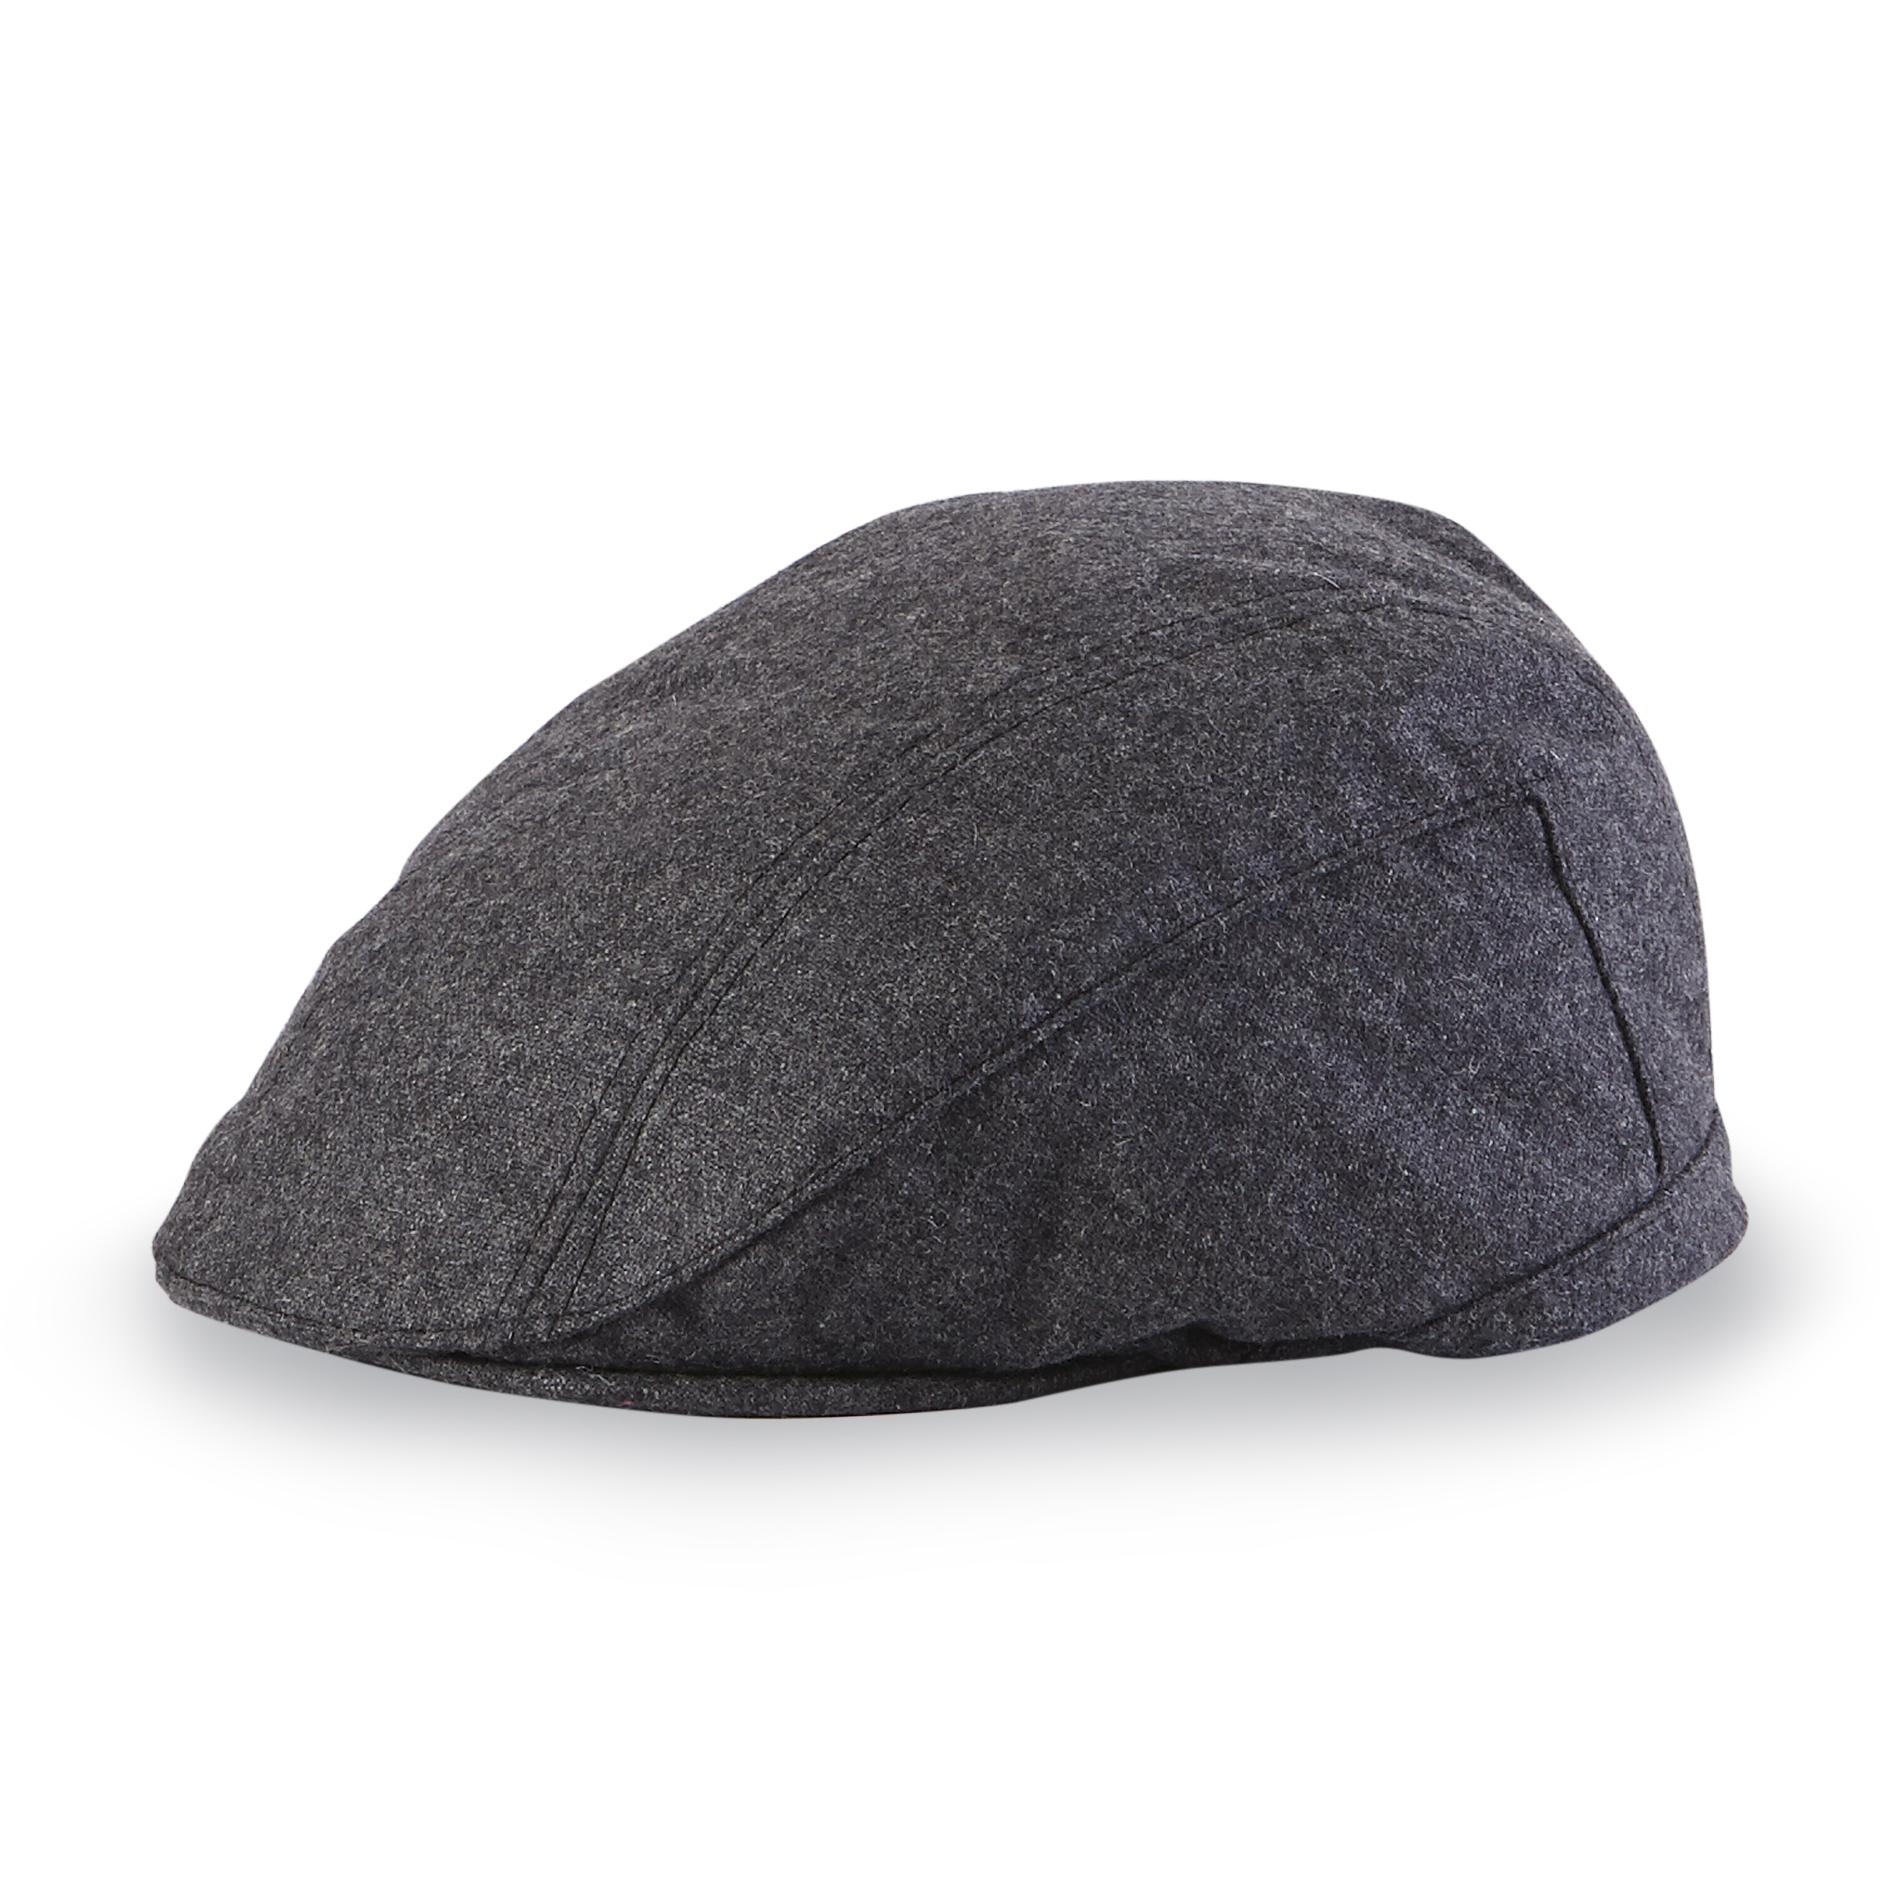 Dockers Men's Convertible Wool-Blend Winter Ivy Hat